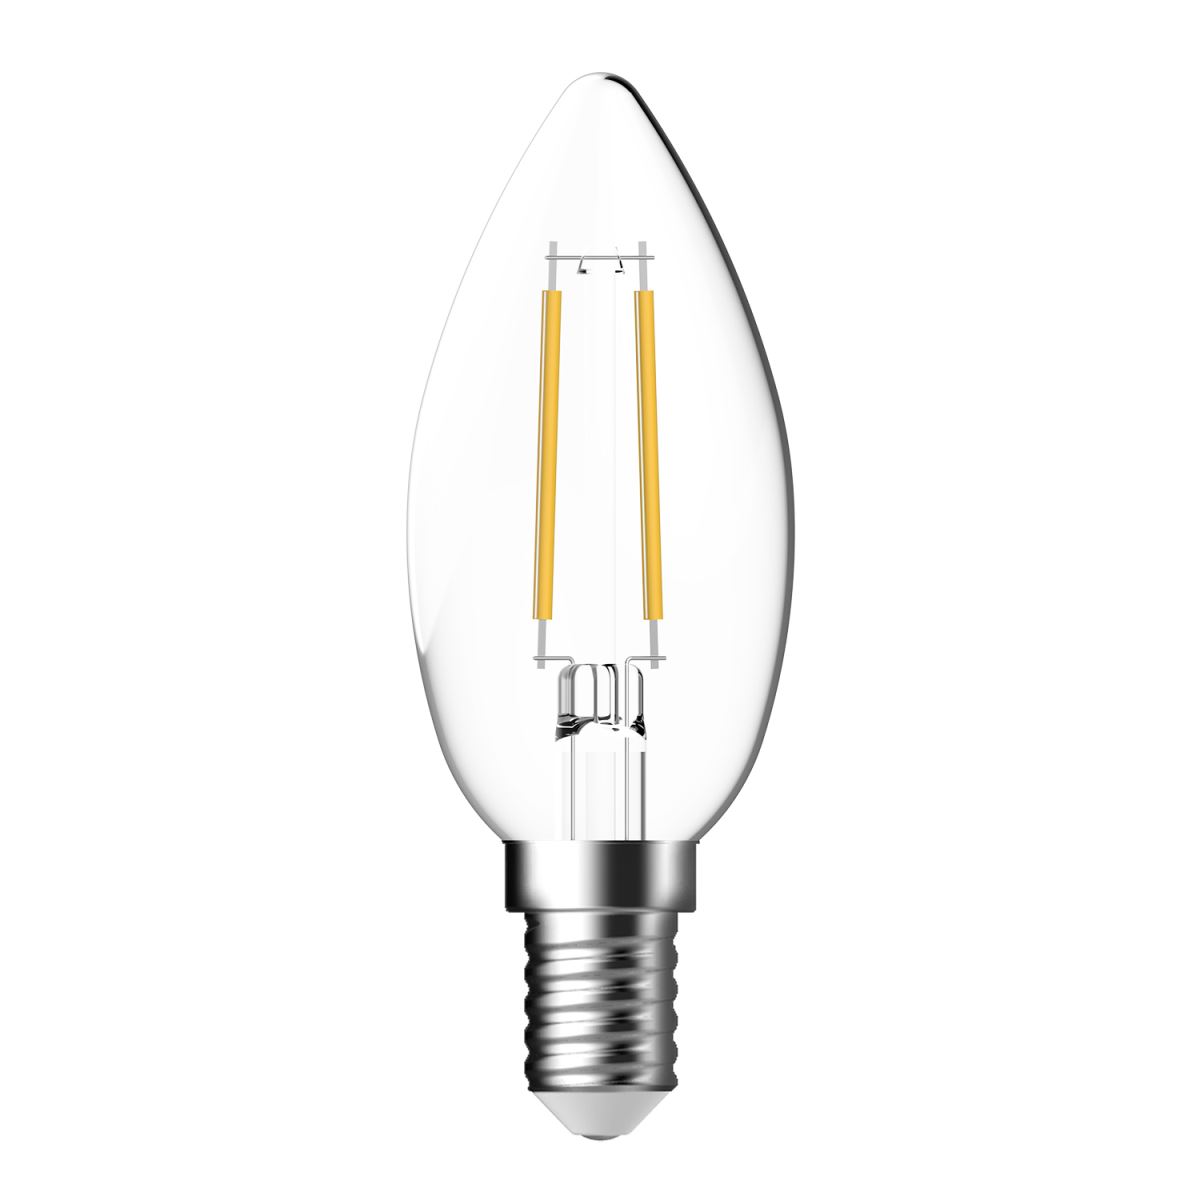 Nordlux Energetic LED Leuchtmittel E14 Filament klar 250lm 4000K 2,1W 80Ra 360° 3,5x3,5x9,7cm von Energetic